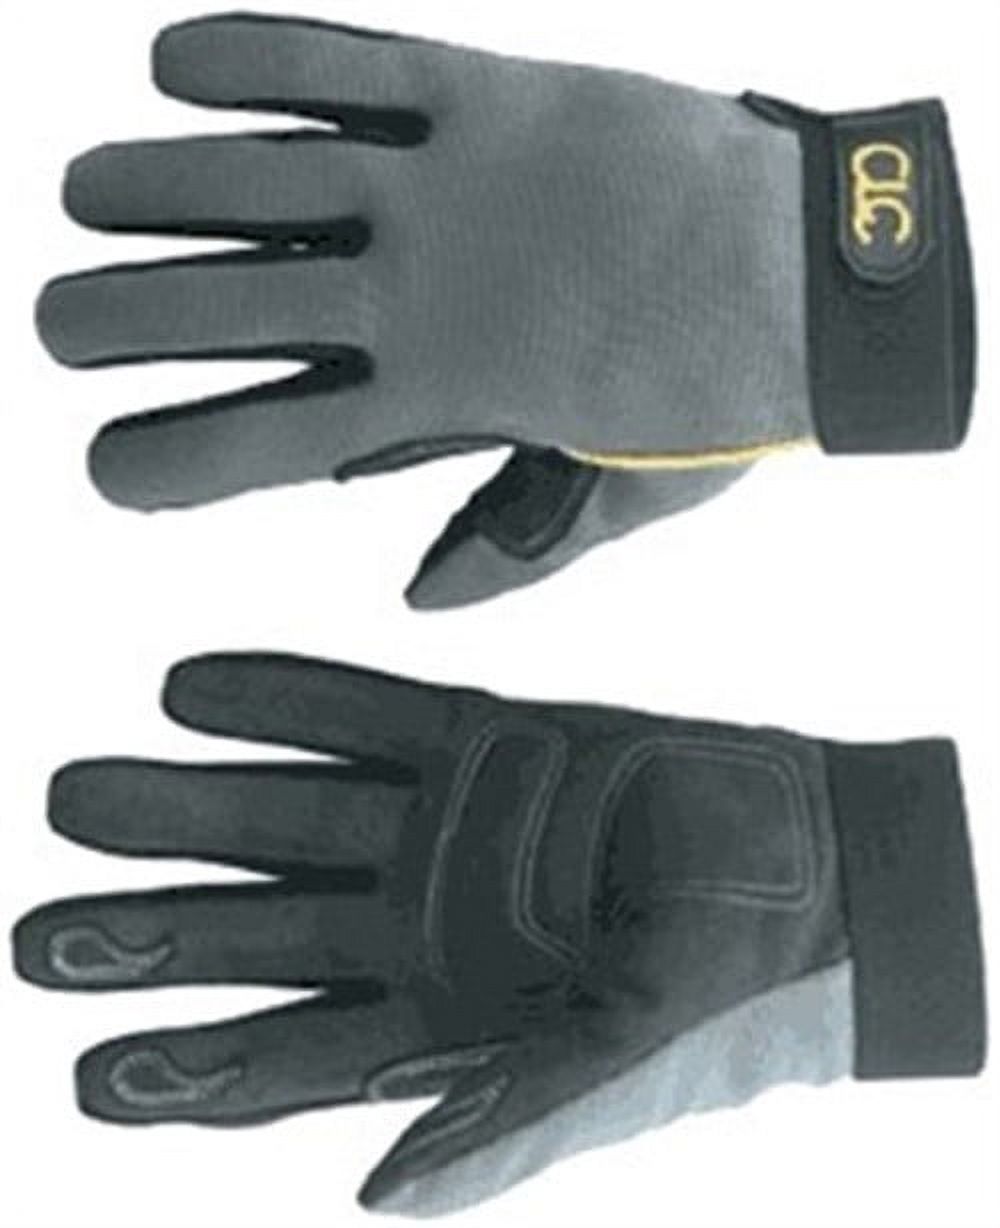 Custom Leathercraft Work Gloves, Black and Gray Large Handyman Gloves - image 2 of 2